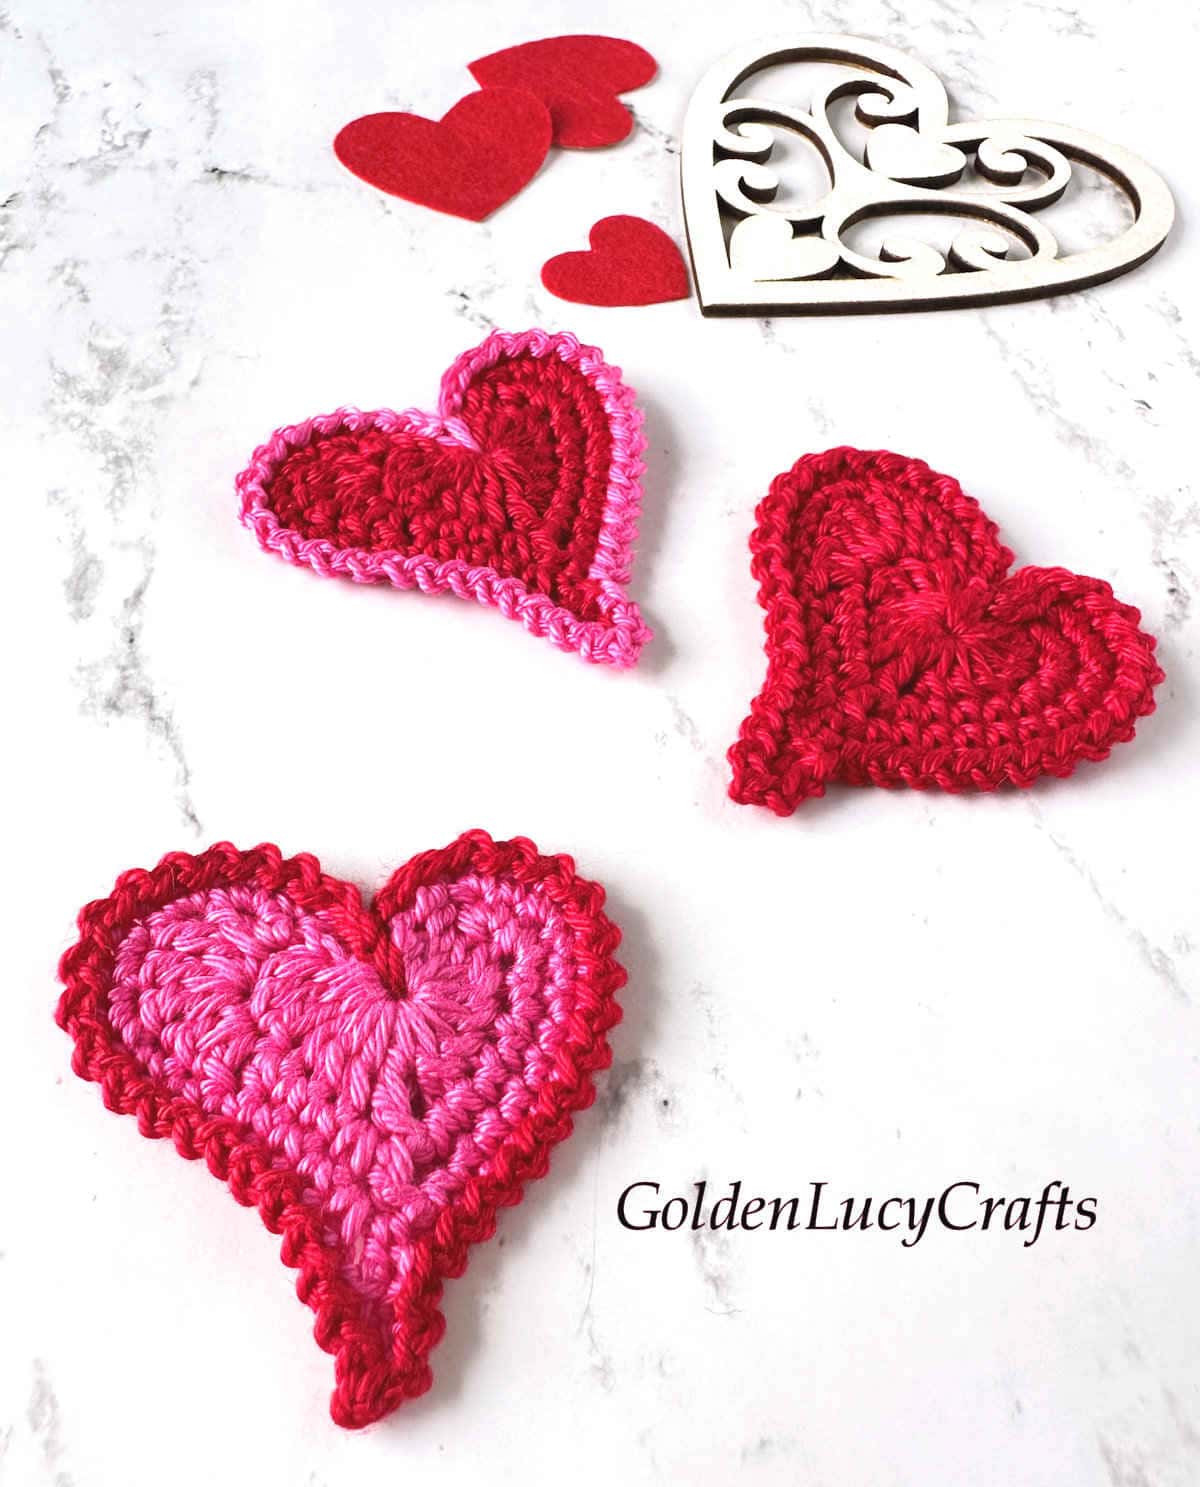 Crochet asymmetrical heart close up picture.